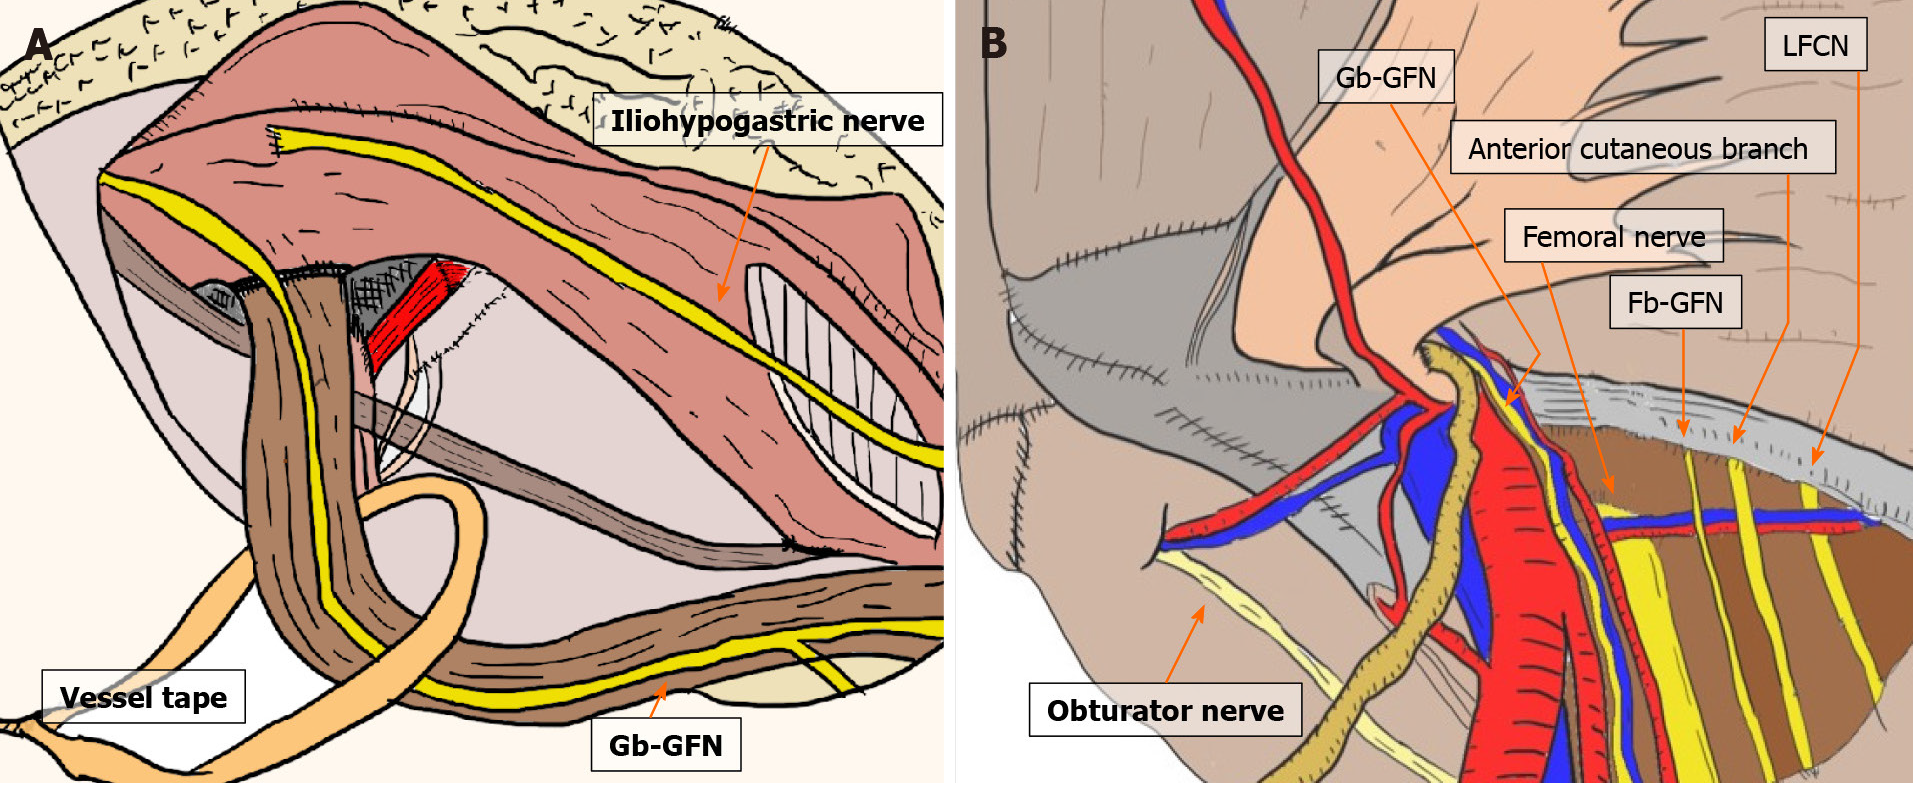 Open femoral hernia repair reveals a hernia sac containing a necrotic